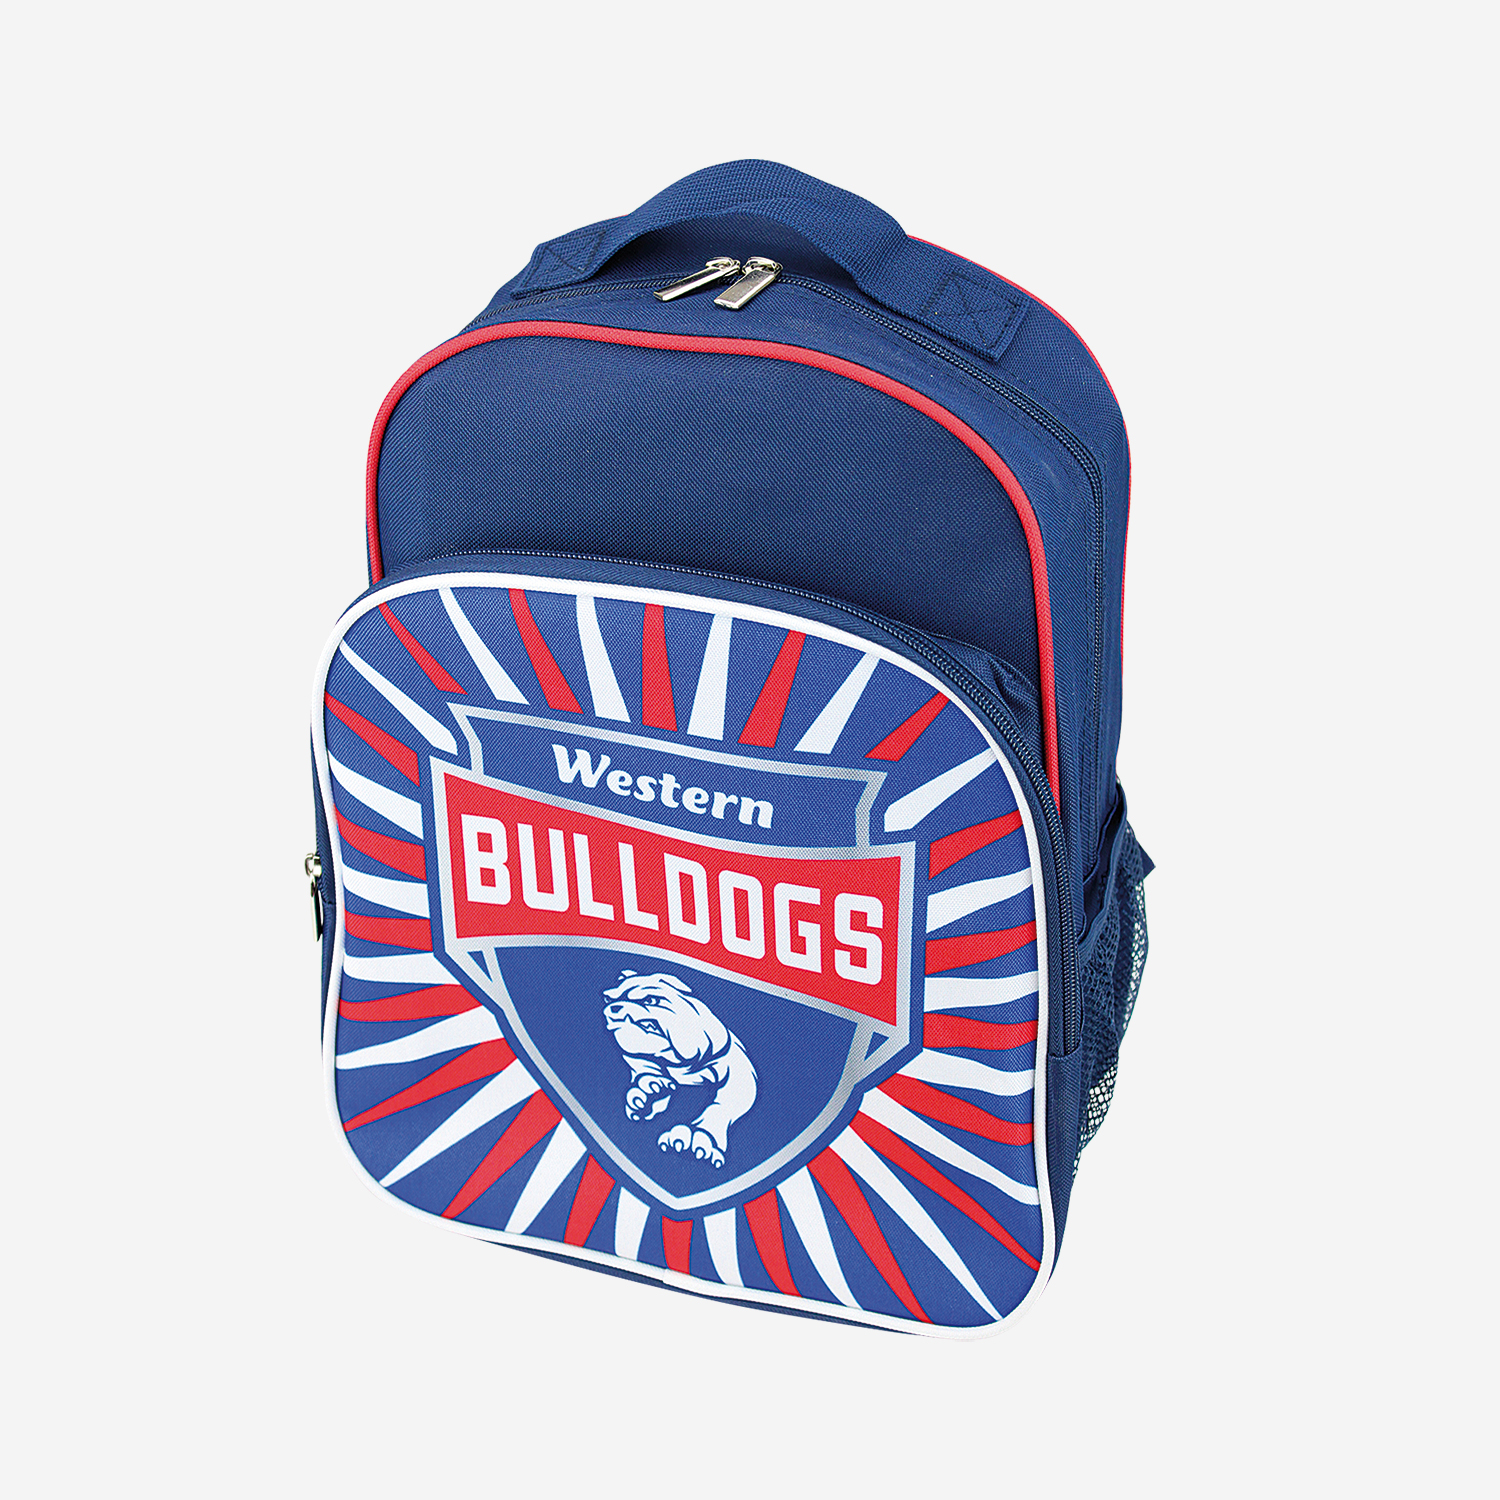 Bulldogs Shield Backpack